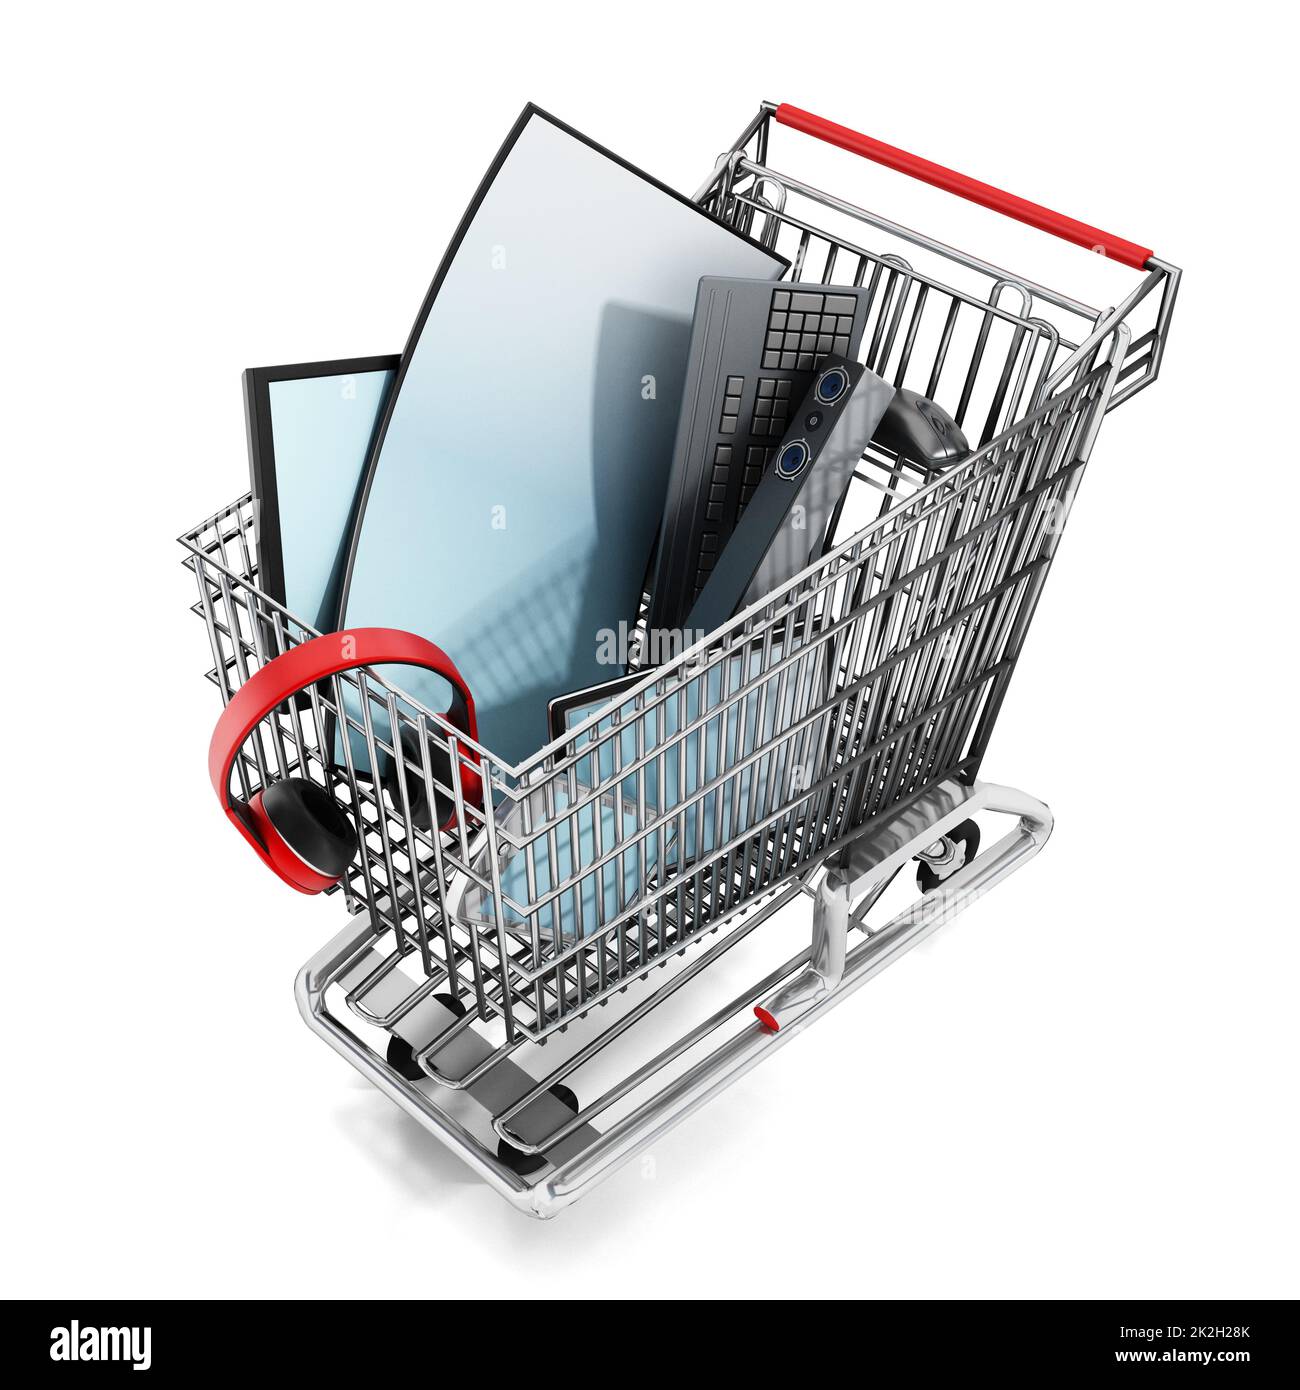 Electronic equipment inside the shopping cart Stock Photo